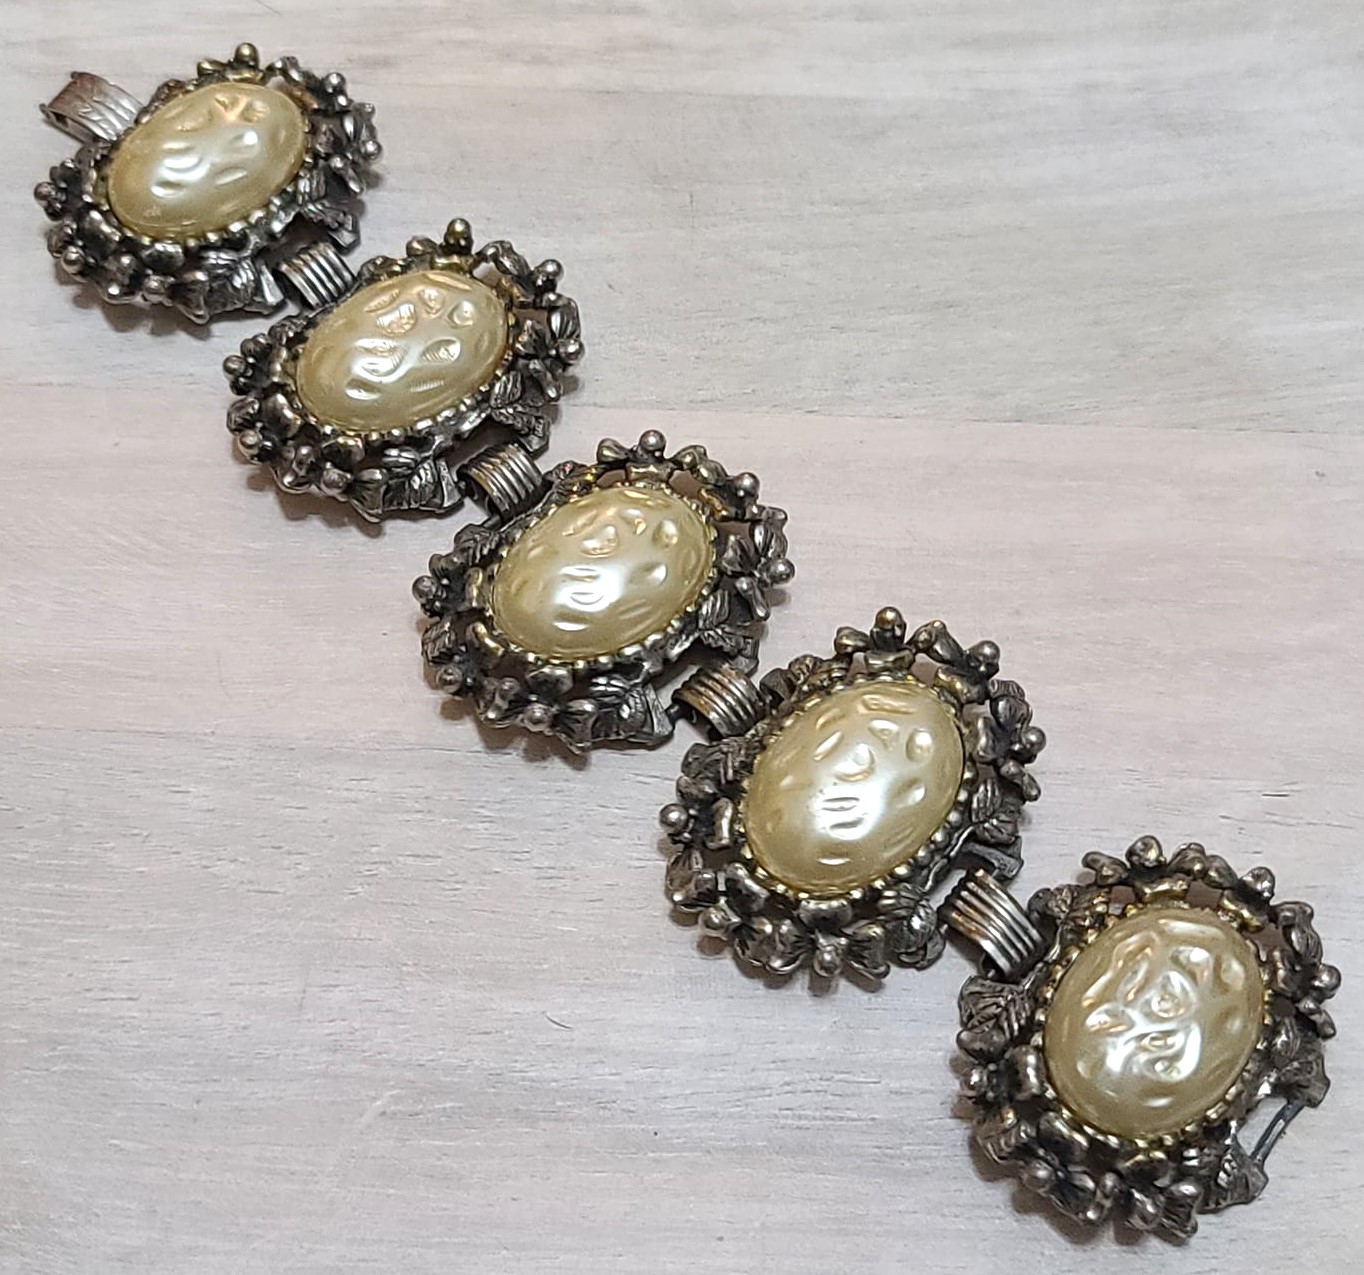 Repousse vintagee bracelet, ornate floral design with center cabachon links